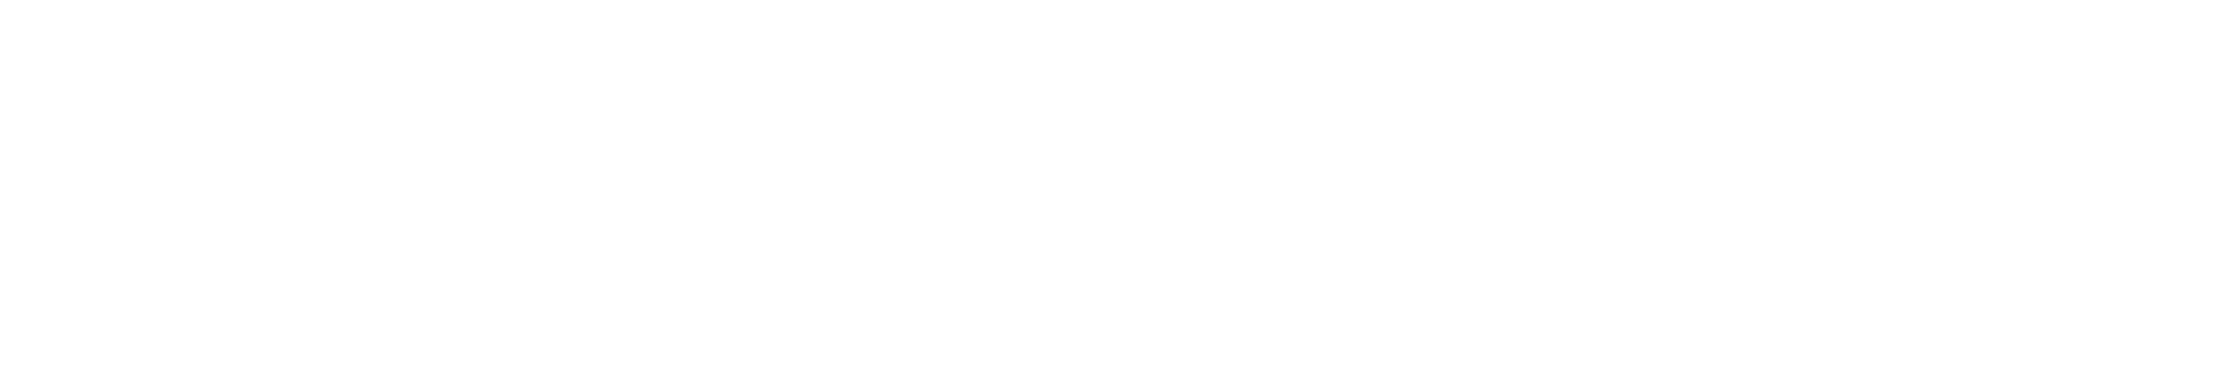 CADC CyberAgent Developer Conference 2023